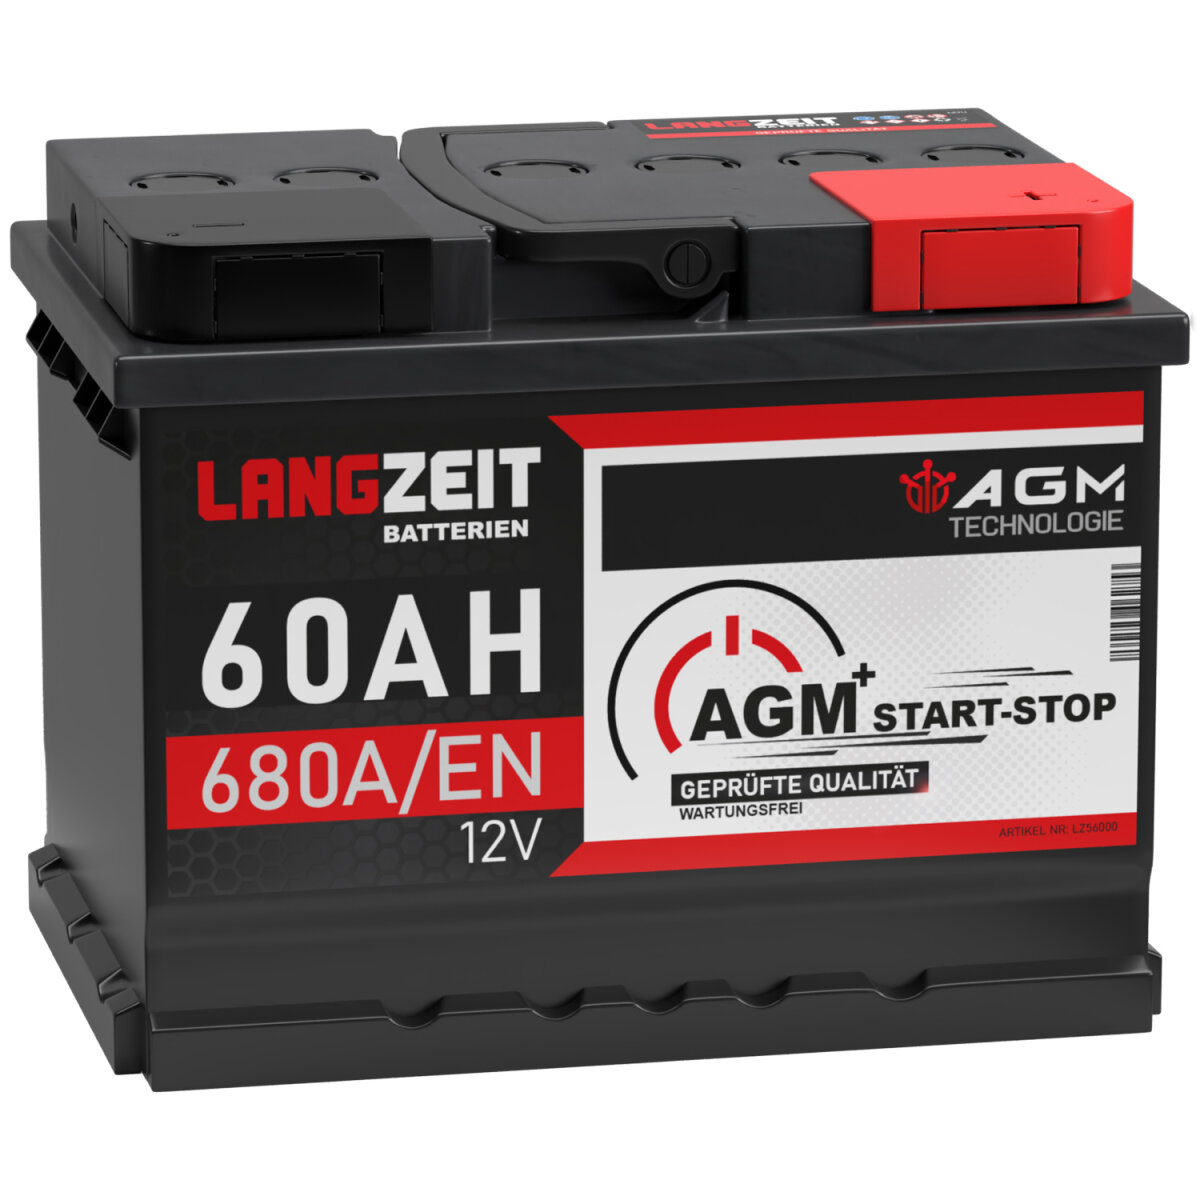 https://www.batteriespezialist.de/media/image/product/8051/lg/langzeit-agm-batterie-60ah-12v.jpg